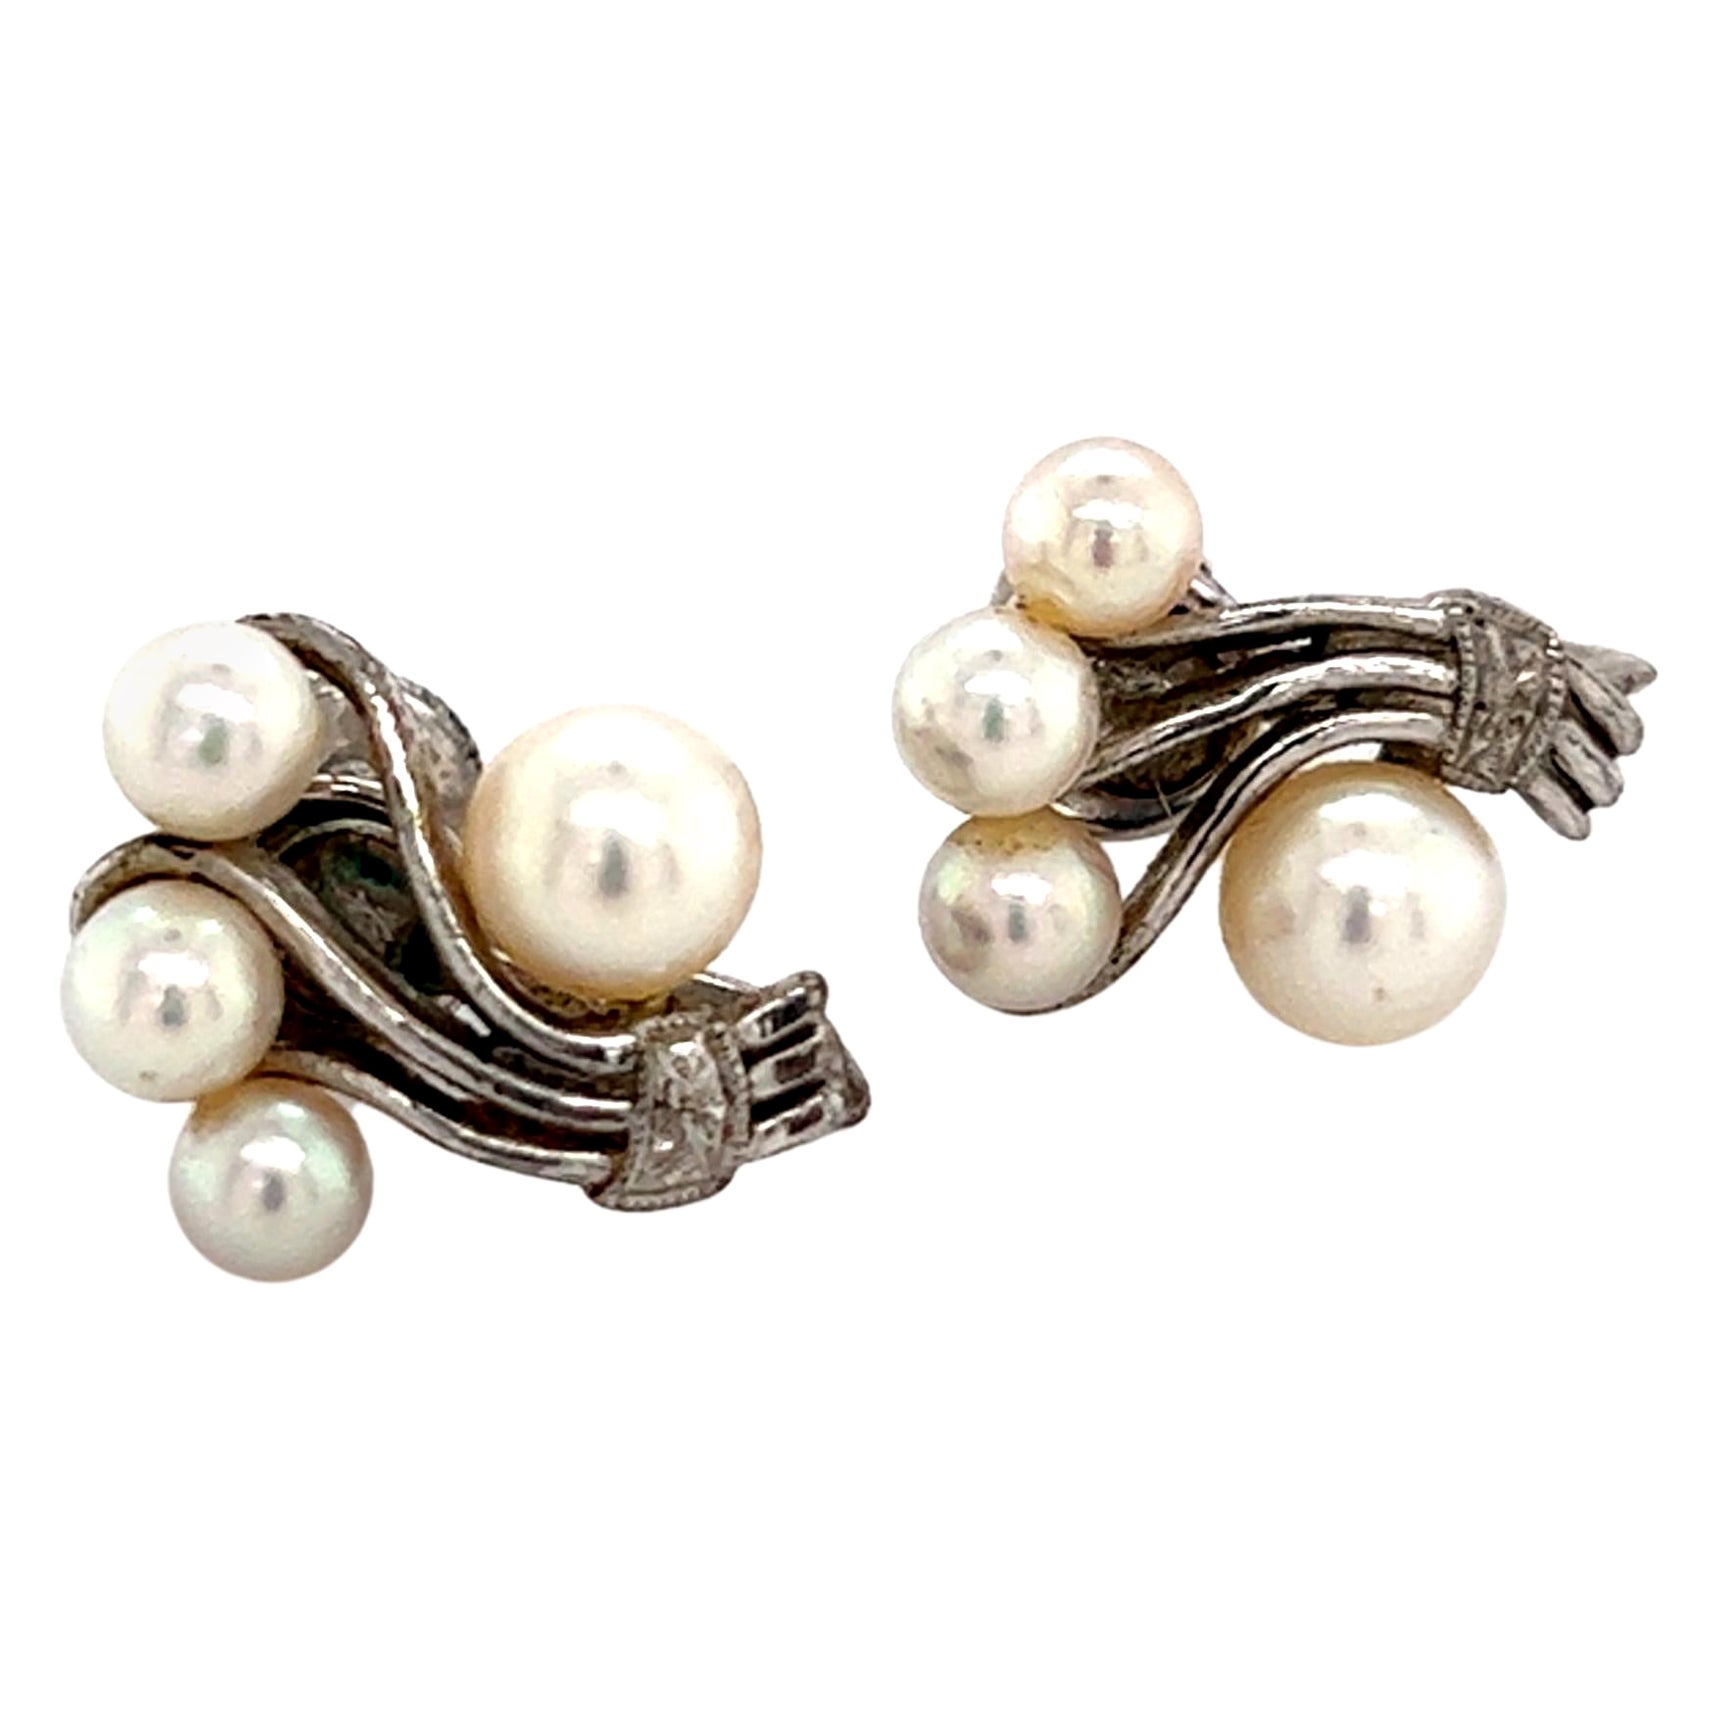 Mikimoto Estate Akoya Pearl Earrings Sterling Silver 5.75 mm 4.5 Grams